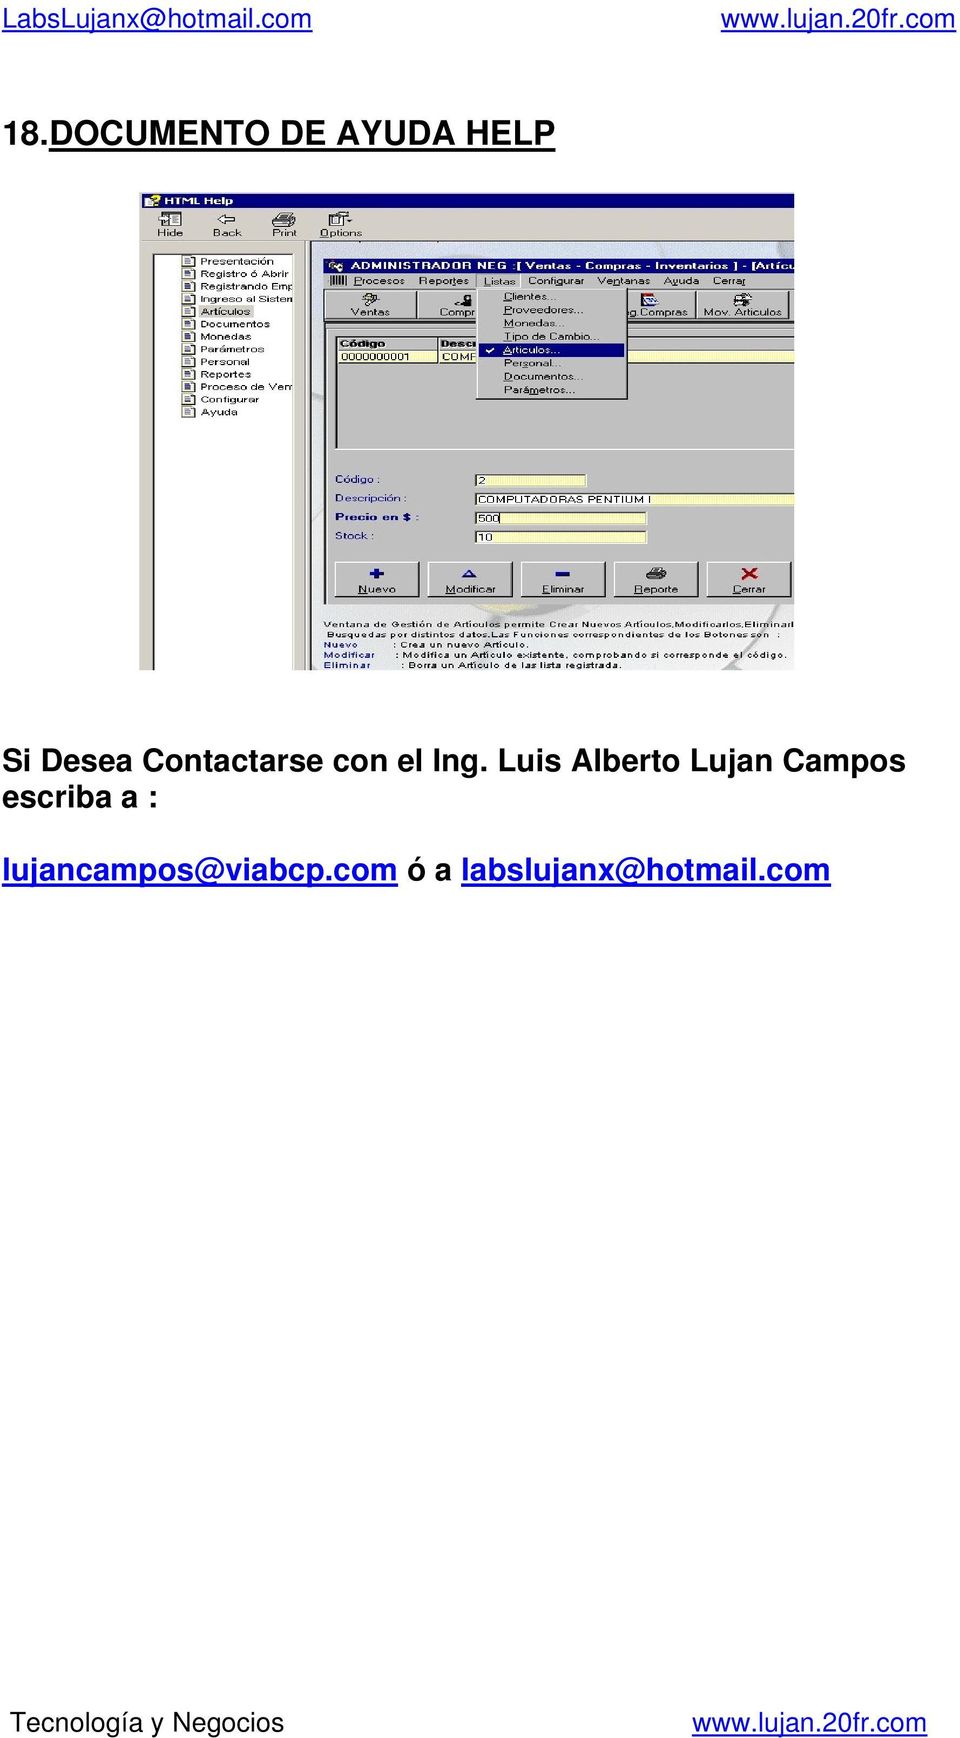 Luis Alberto Lujan Campos escriba a